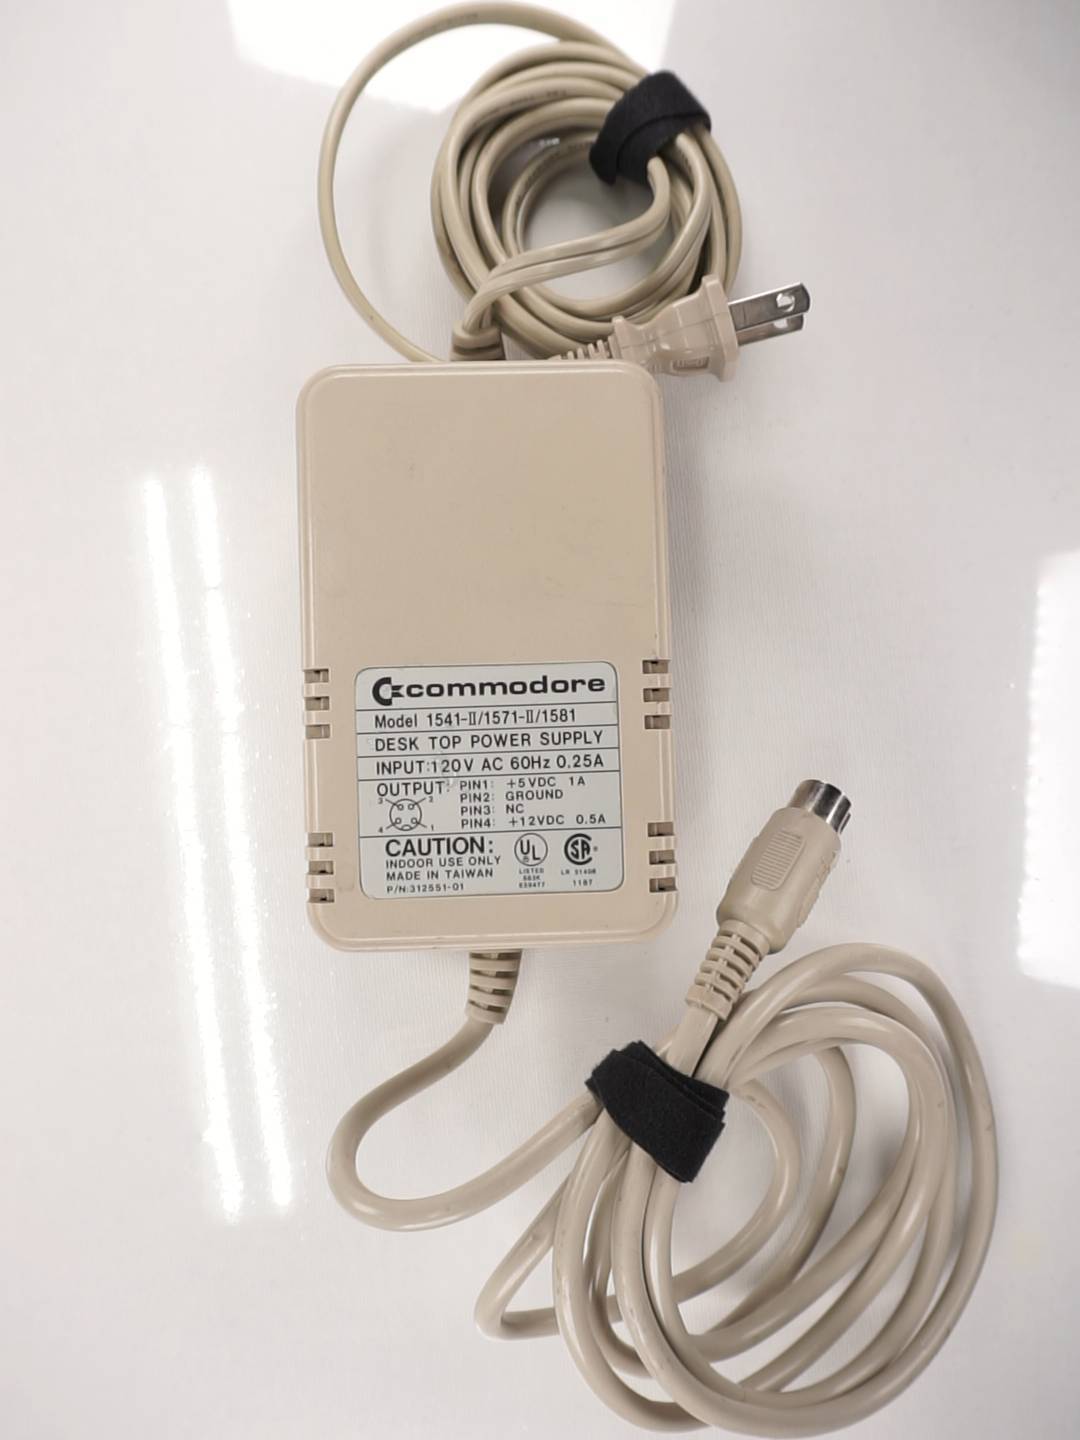 Commodore 1541-ii Desk Top Power Supply - OEM Tested/Working - 312551-01-nawe